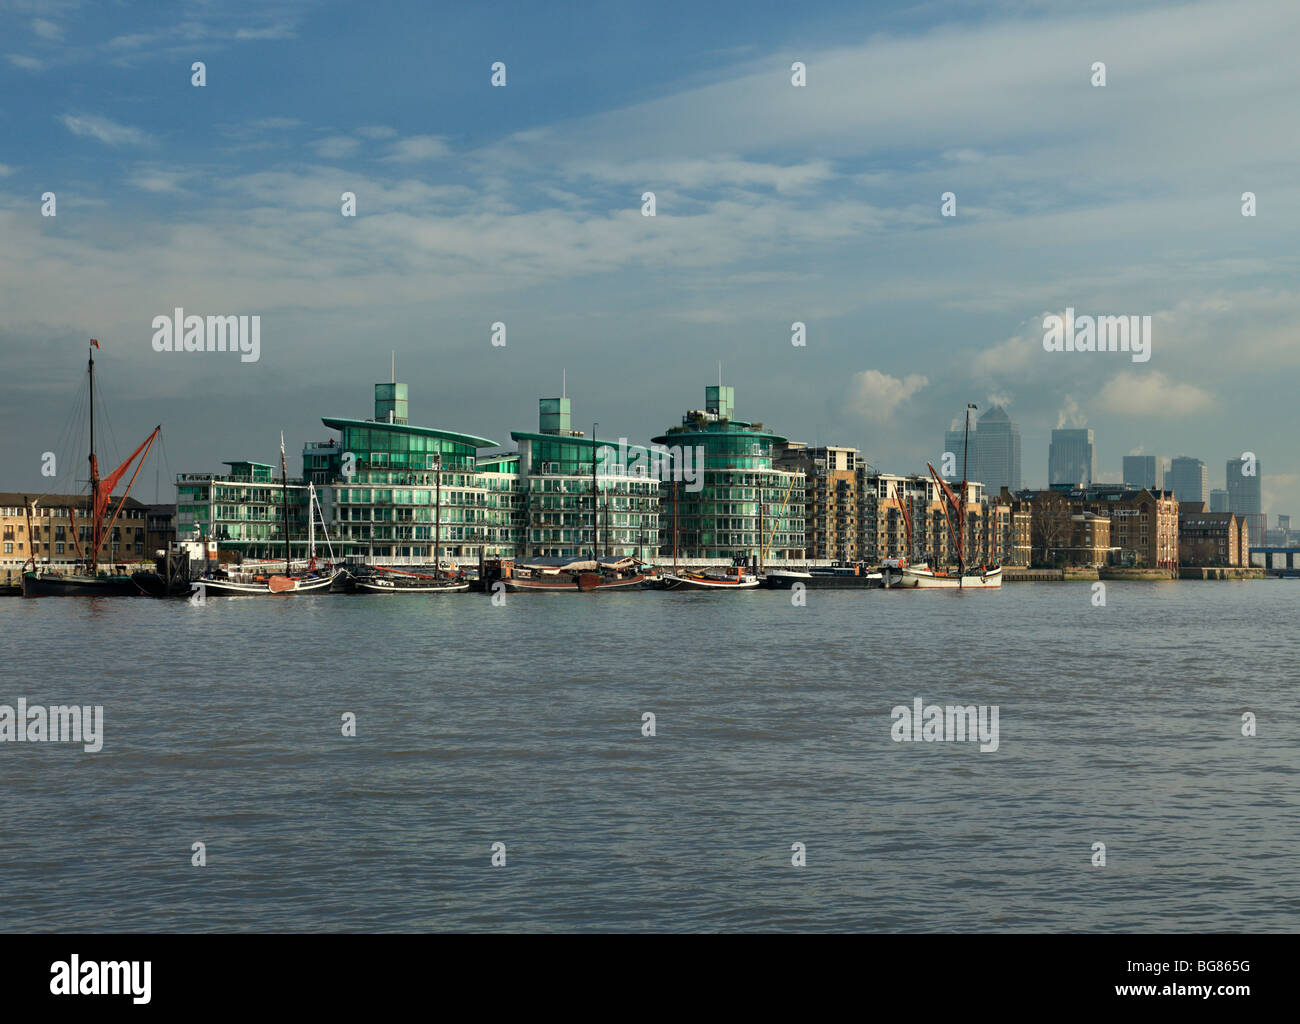 Nueva Thames Riverside Apartments, Wapping, Londres, Inglaterra, Reino Unido. Foto de stock